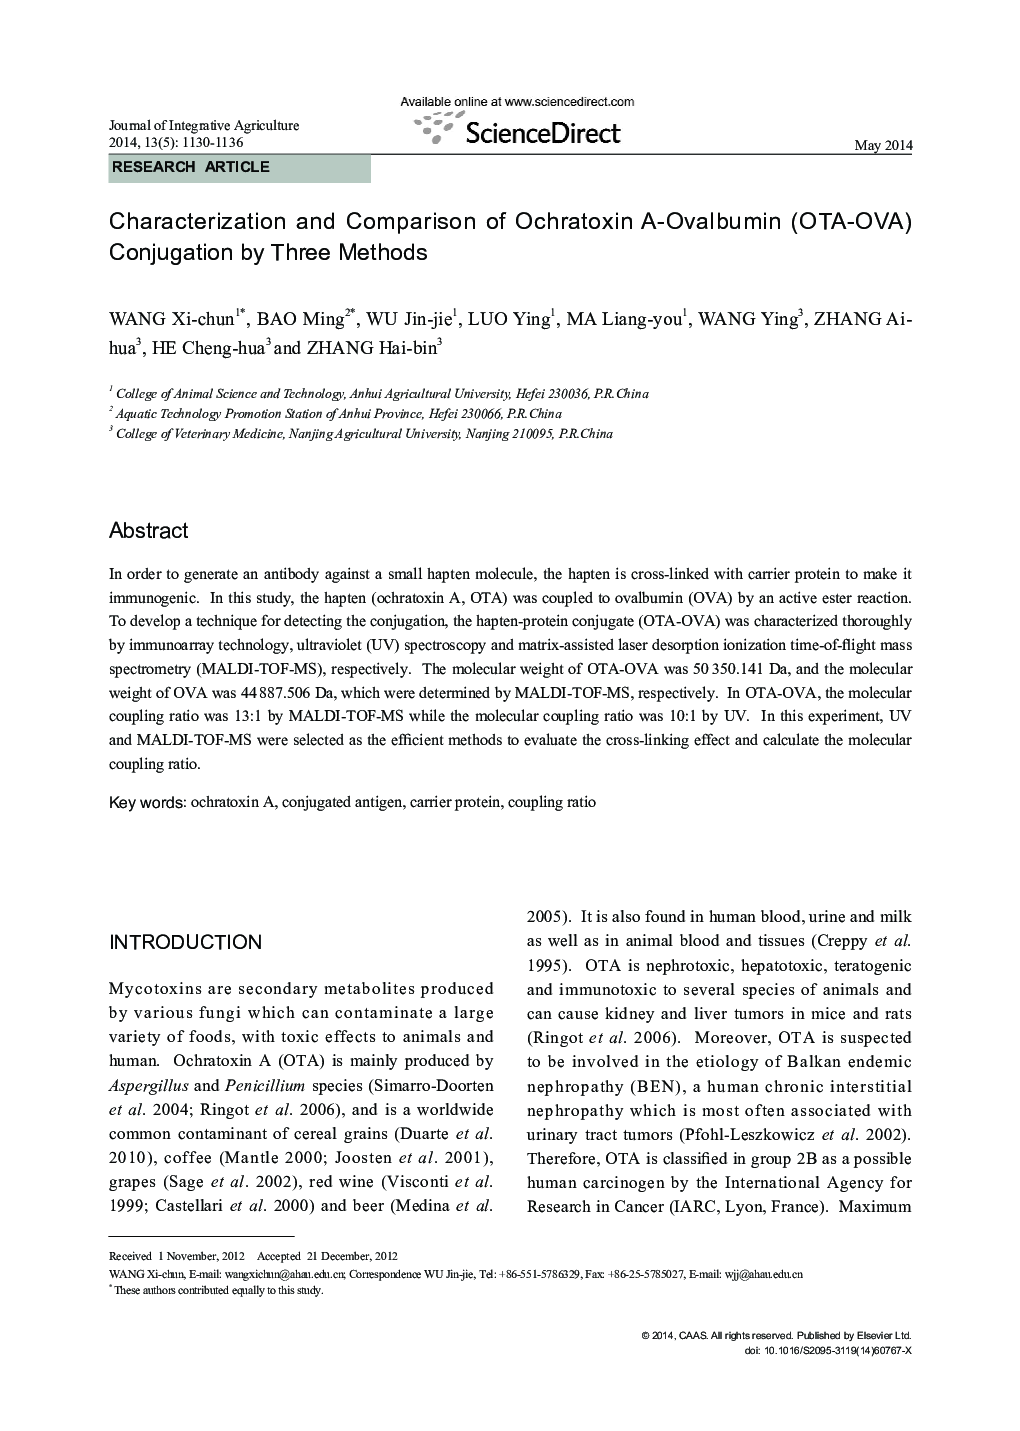 Characterization and Comparison of Ochratoxin A-Ovalbumin (OTA-OVA) Conjugation by Three Methods